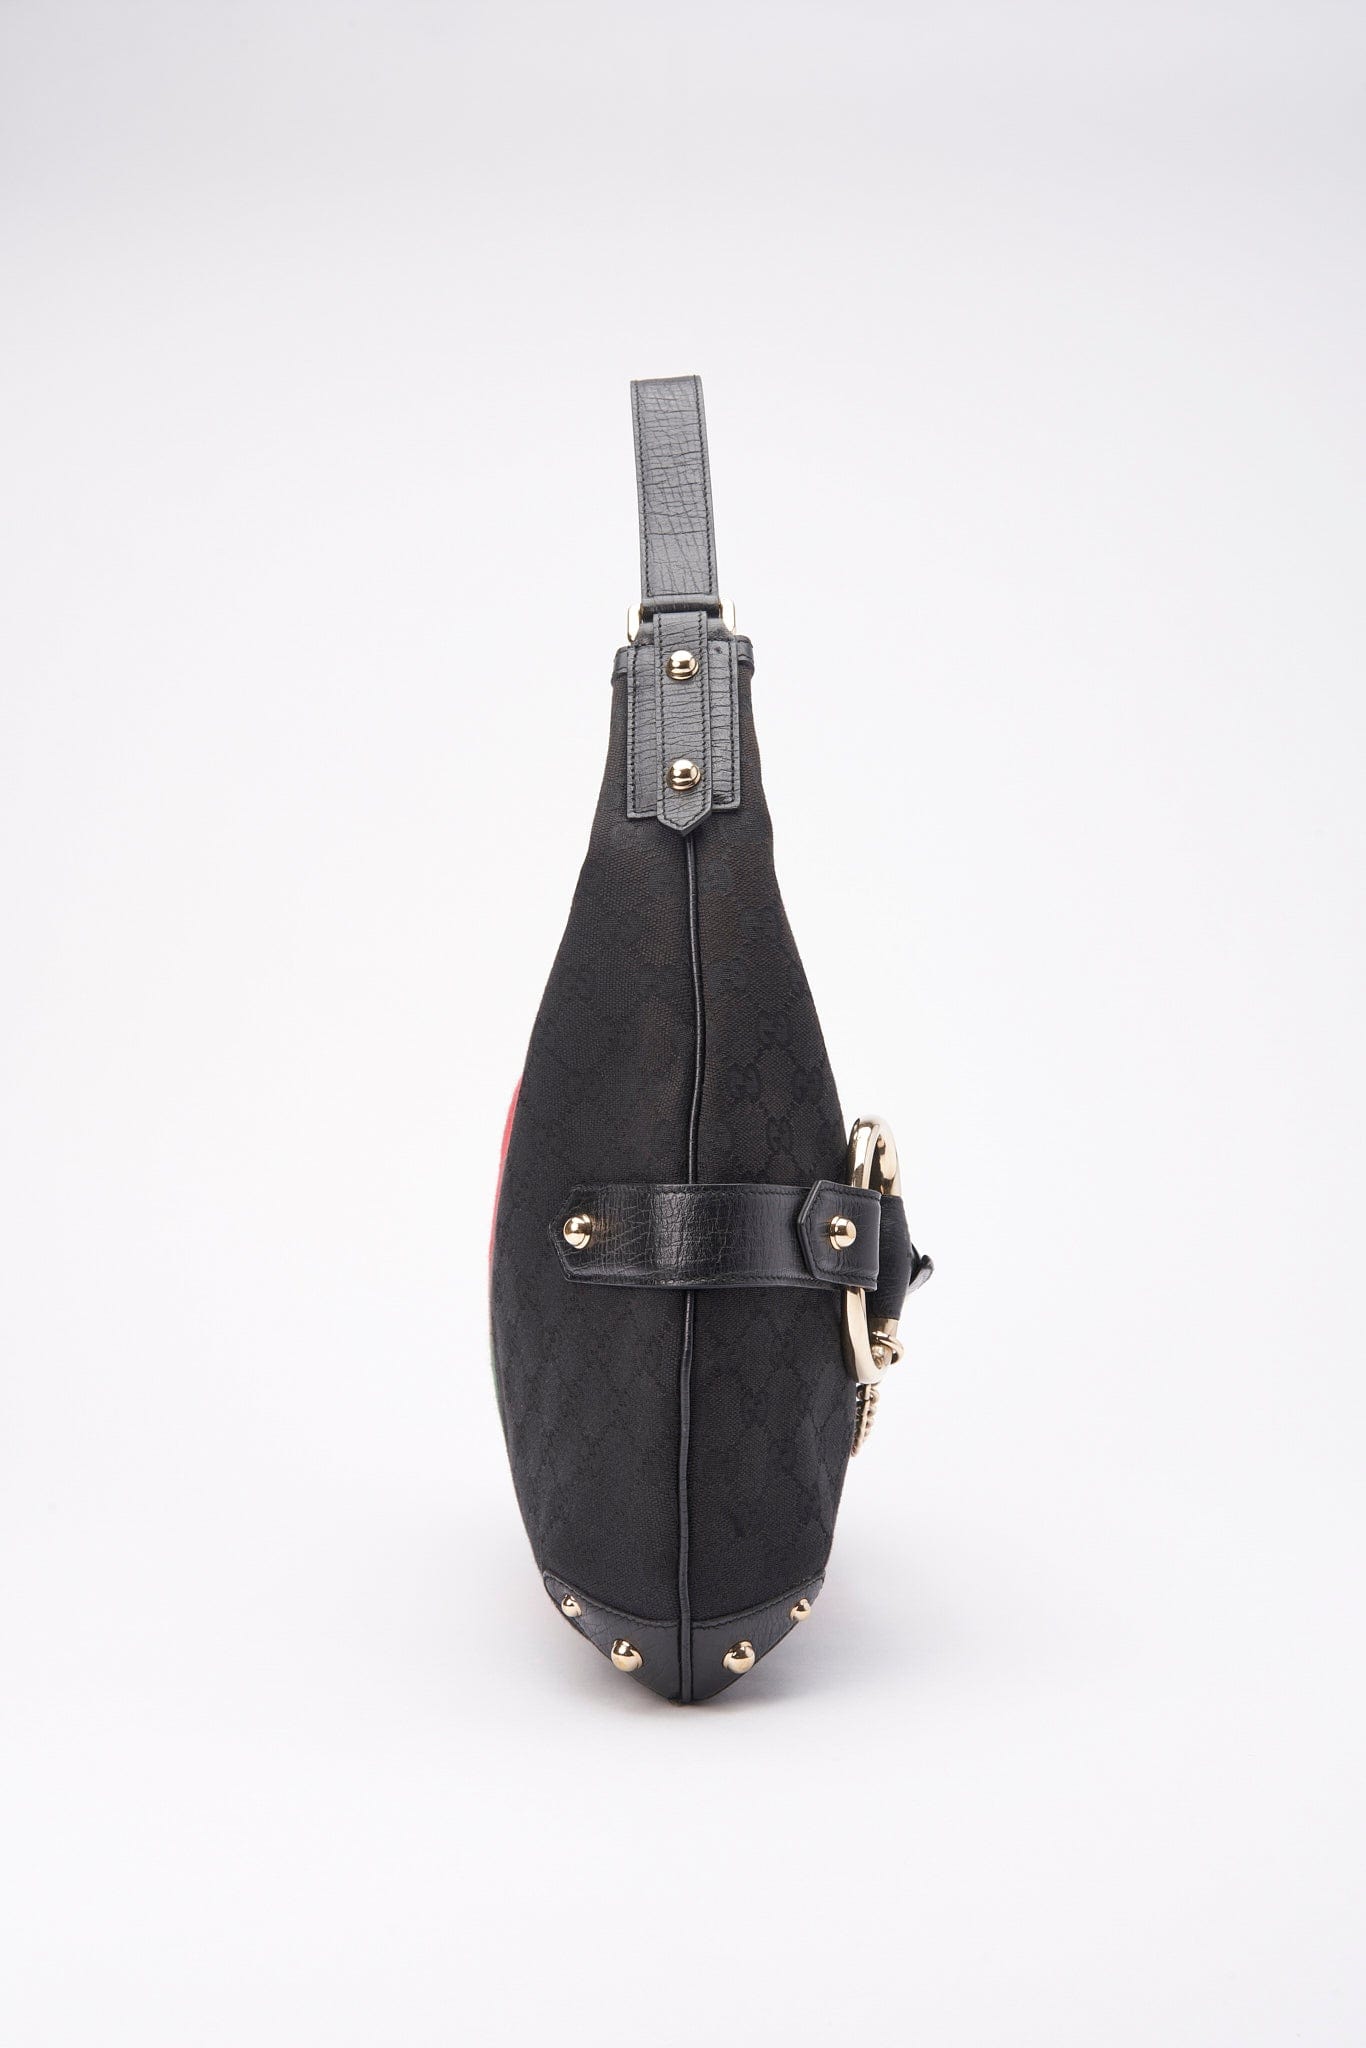 Vintage Gucci Bag w Horsebit Hardware